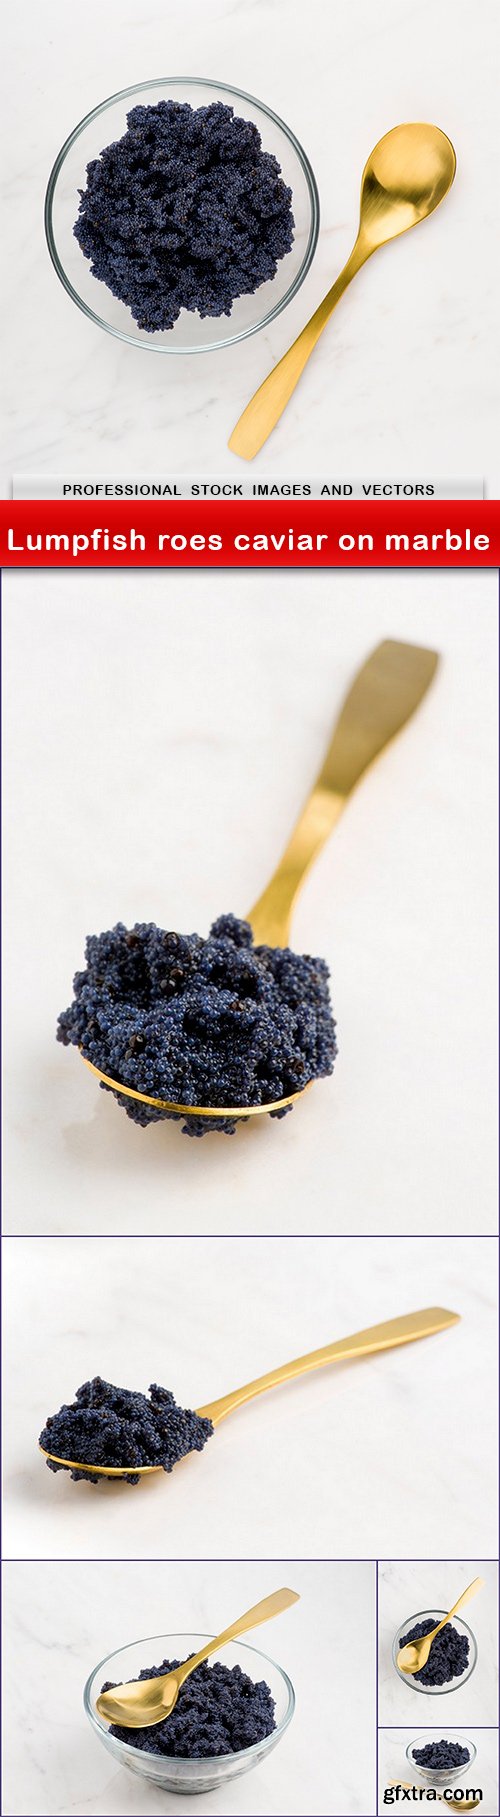 Lumpfish roes caviar on marble - 6 UHQ JPEG